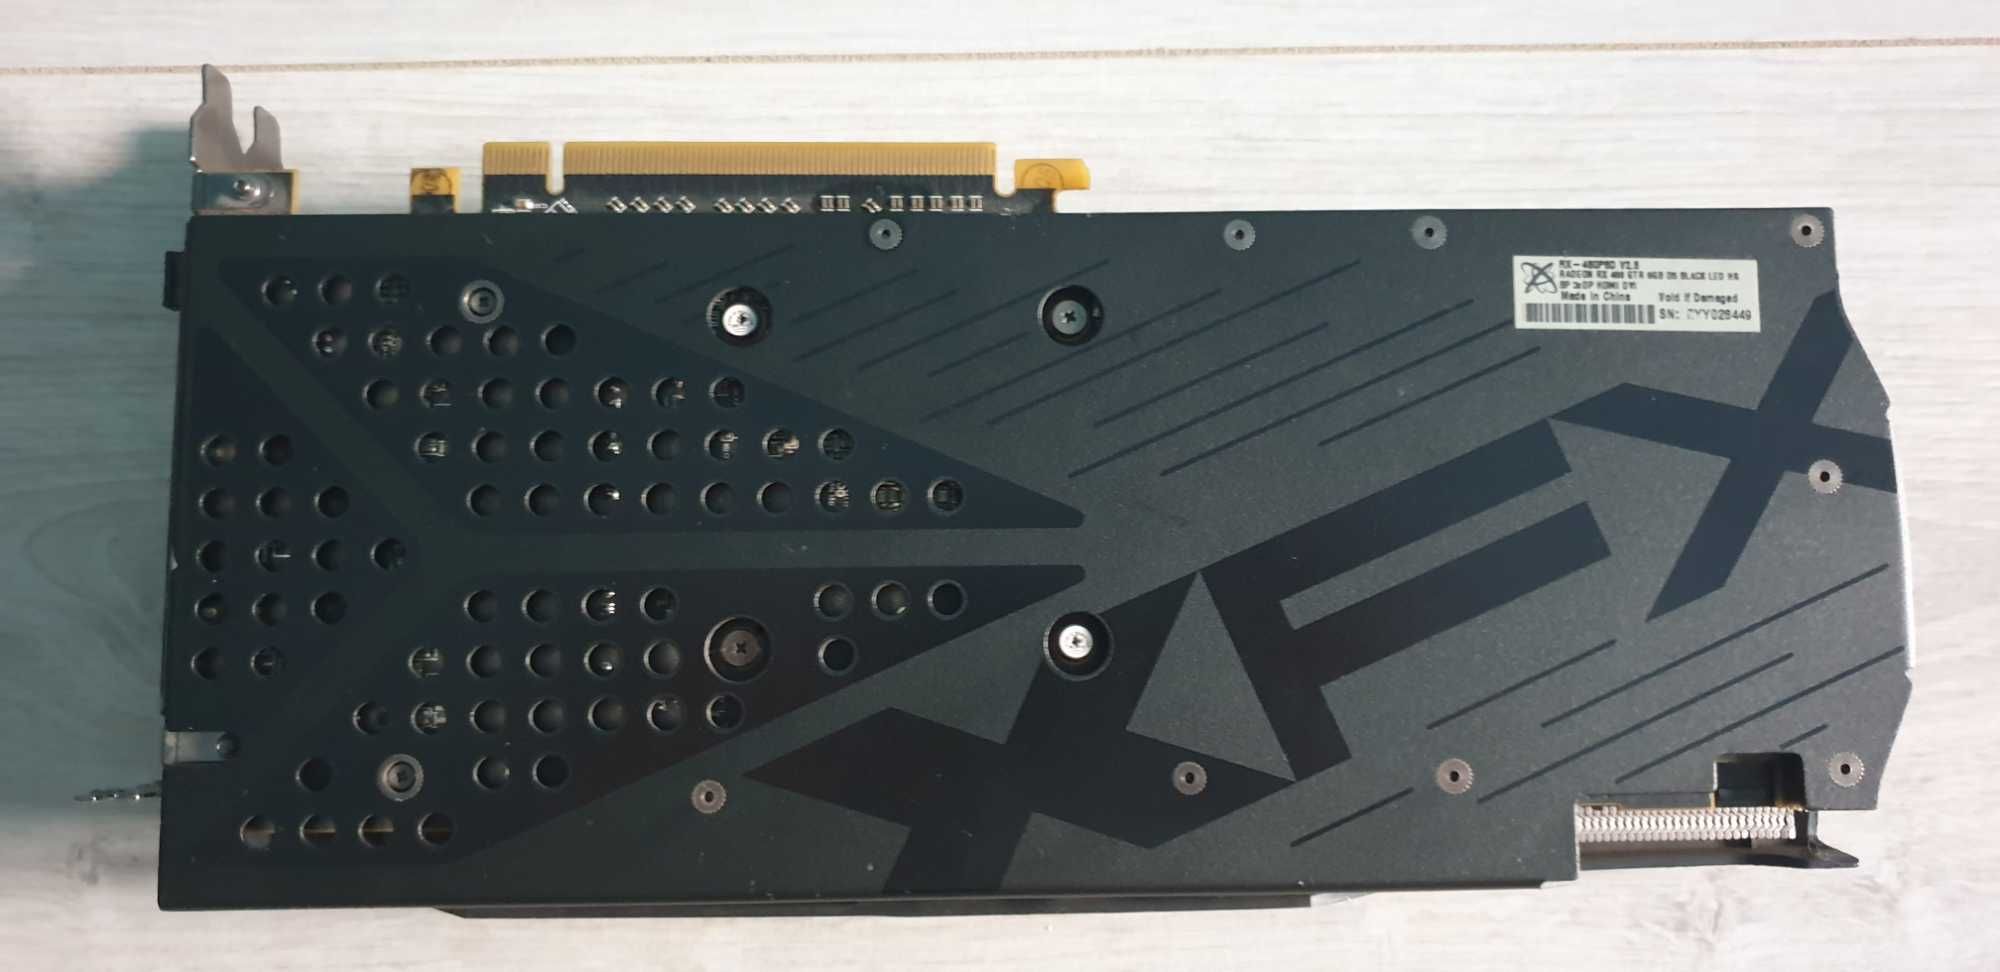 XFX RX480 8GB Black Edition